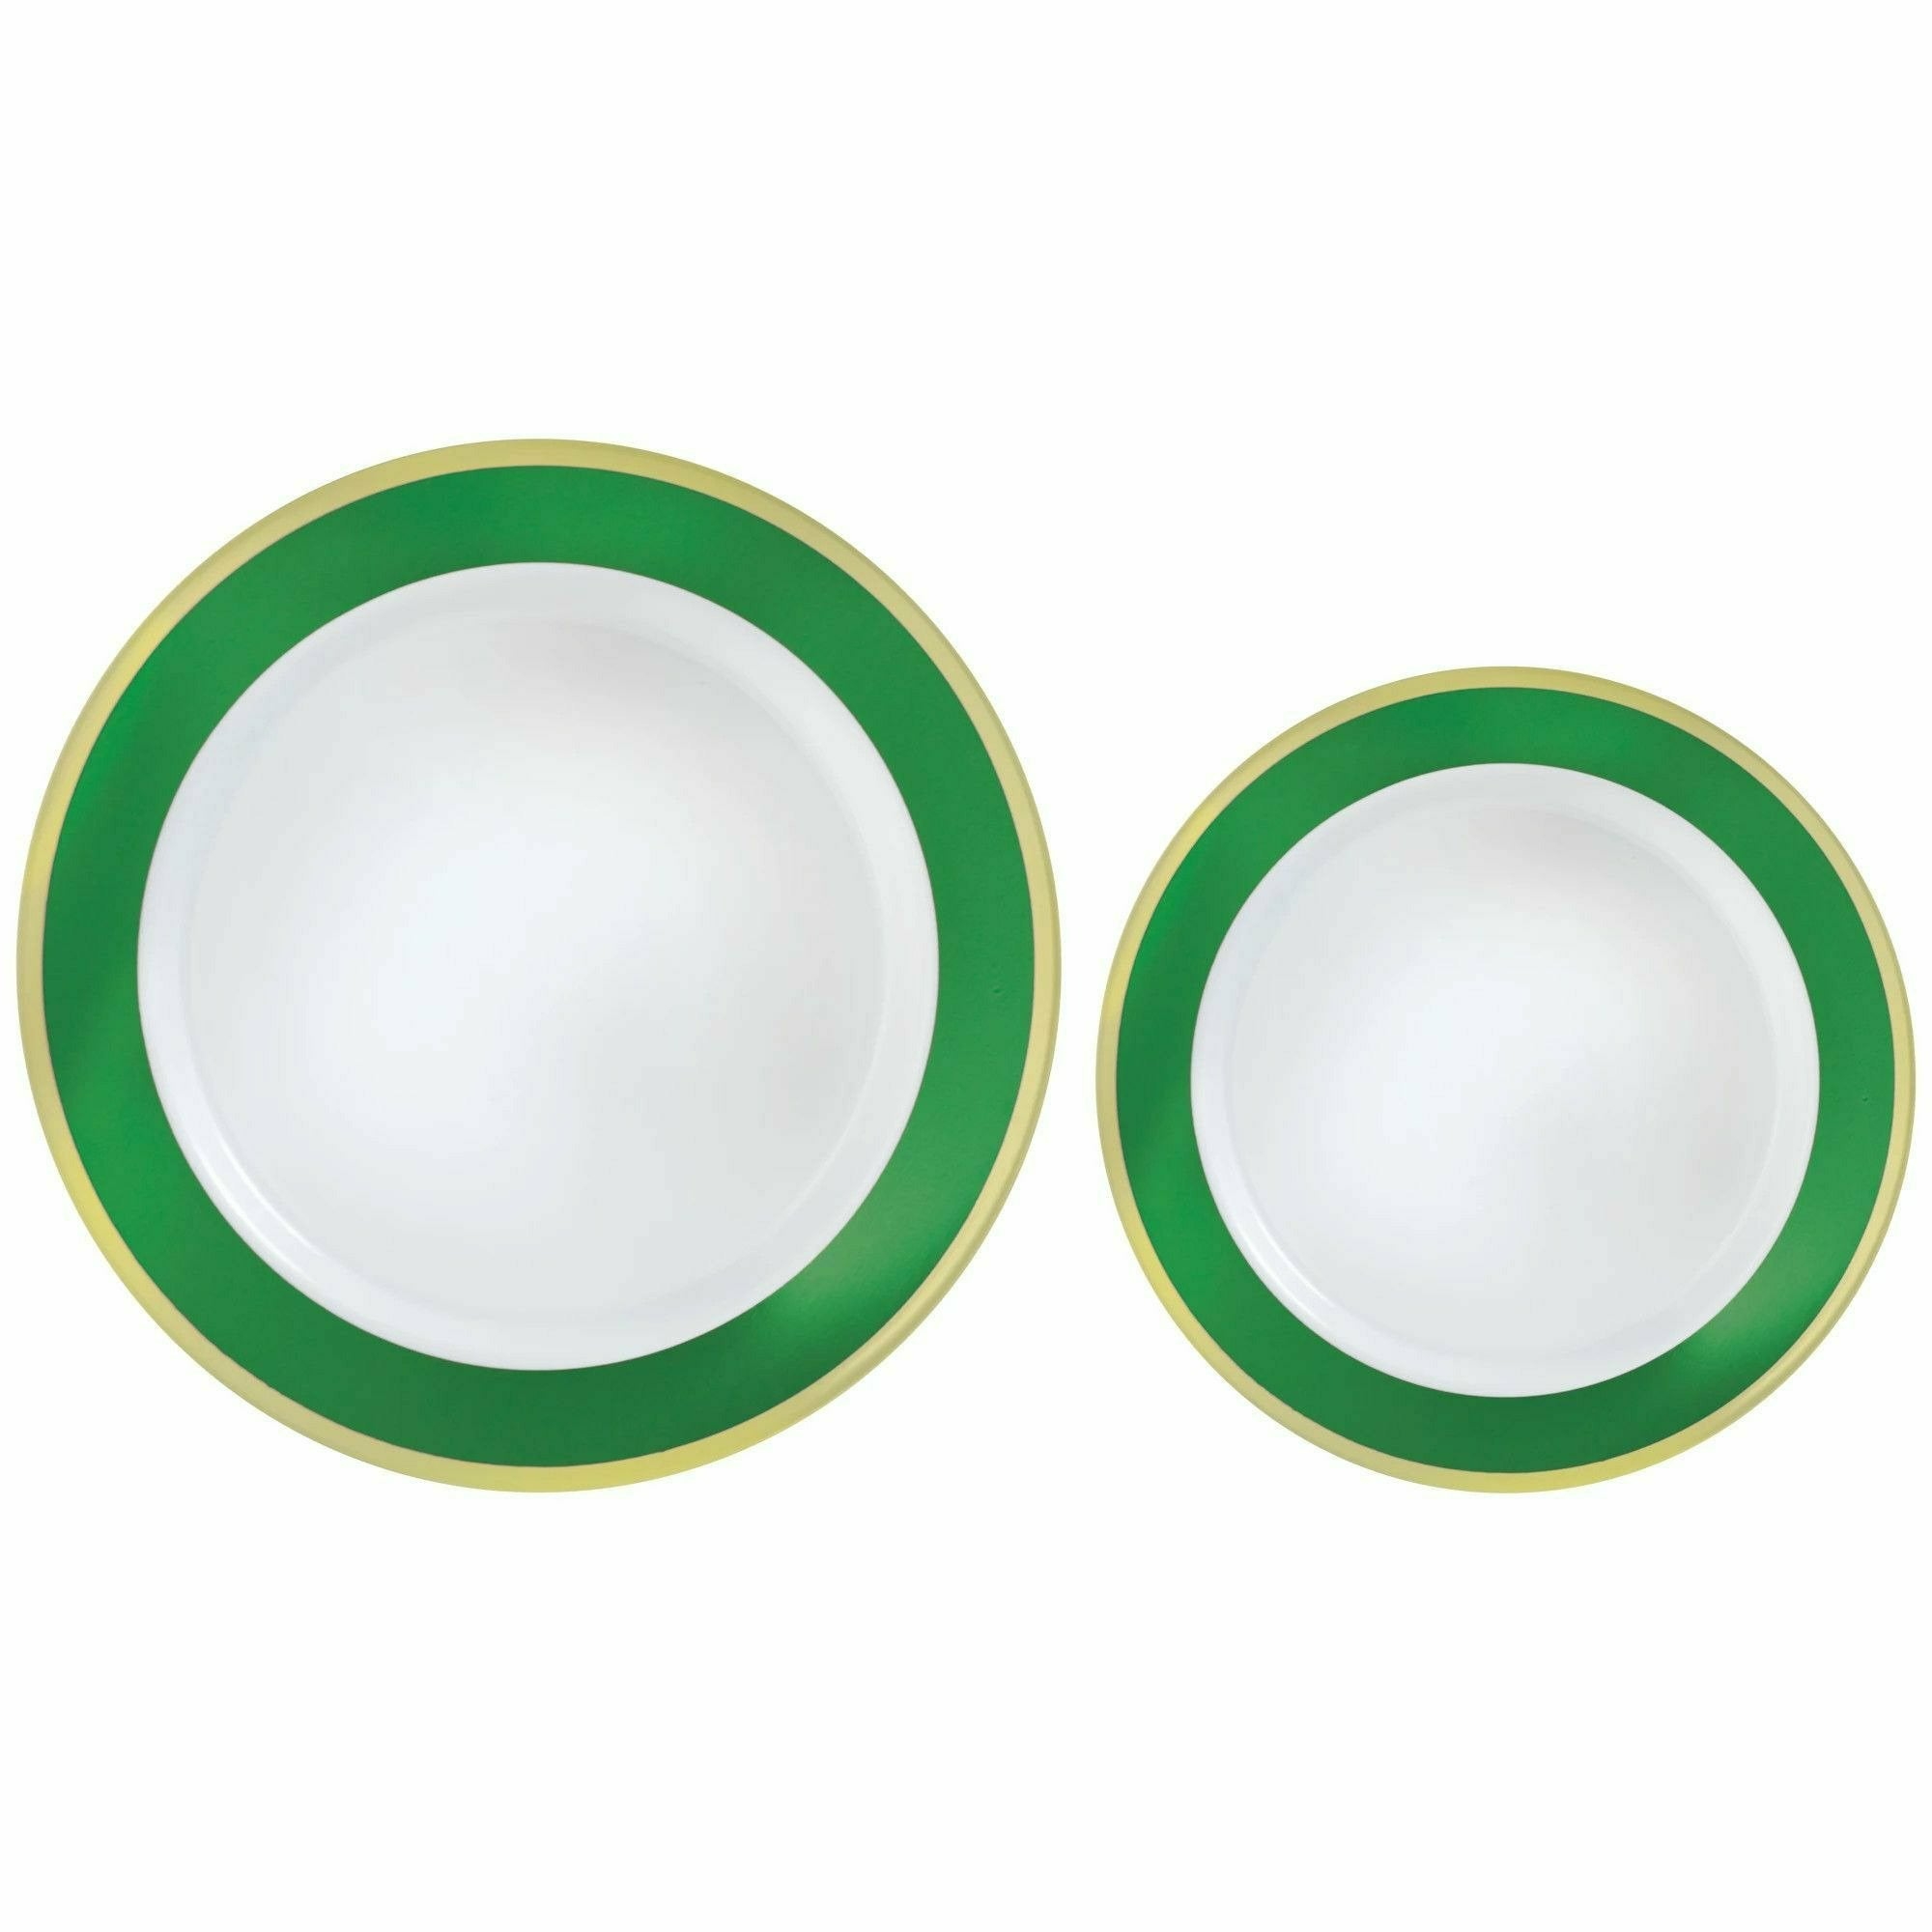 Amscan BASIC Festive Green - Multipack, Hot Stamped Plastic Border Plates